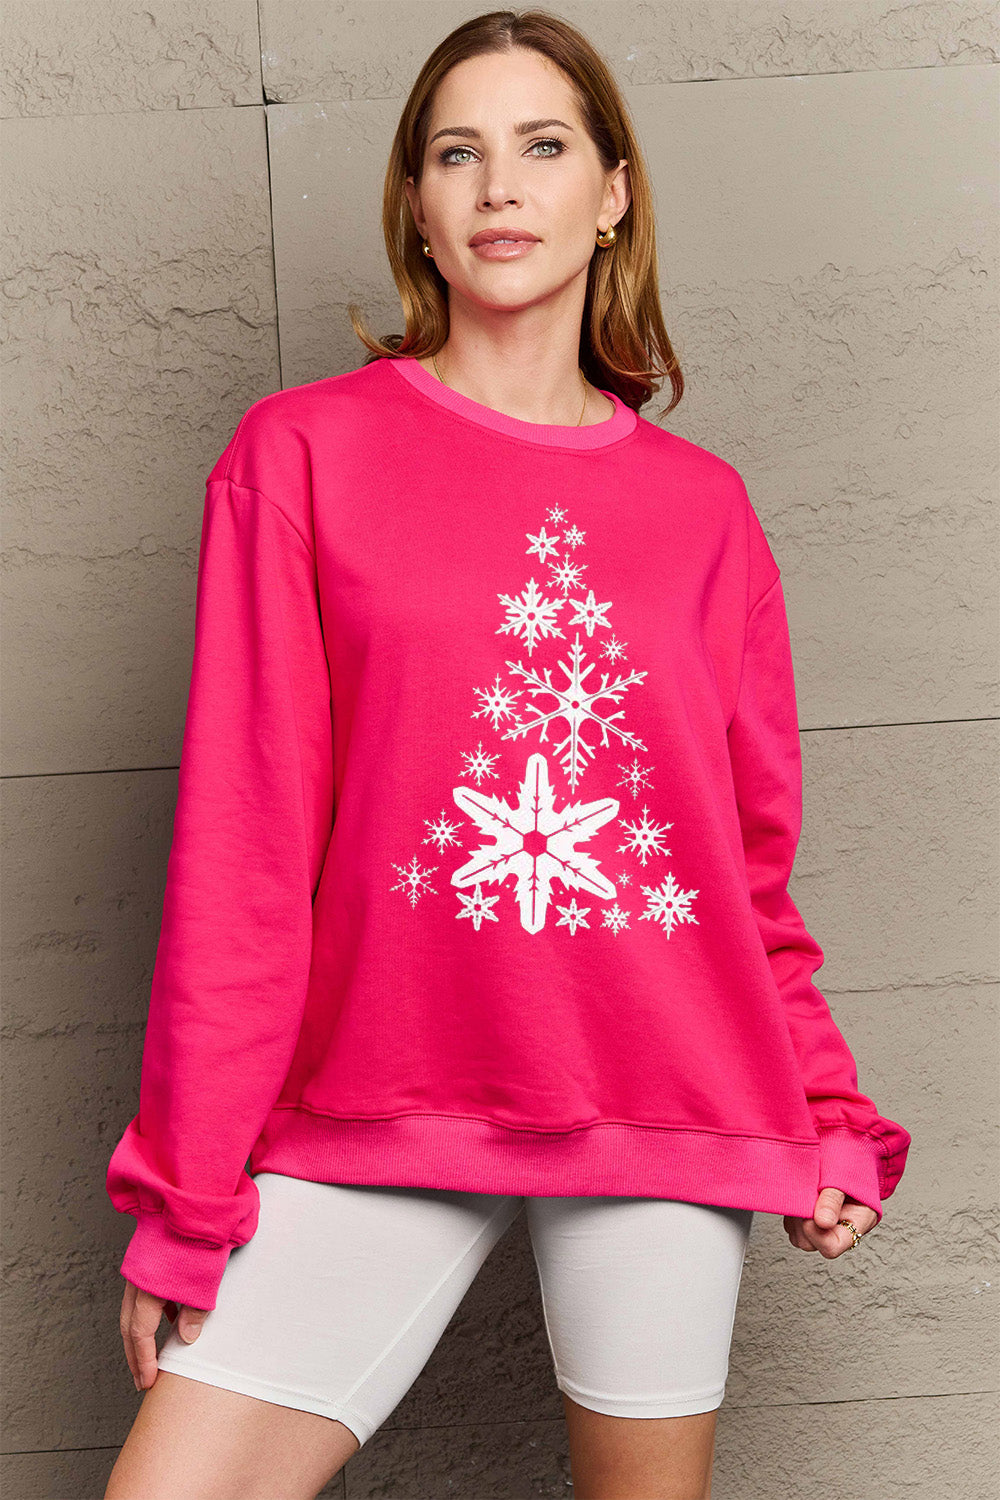 Snowflake Christmas Tree Graphic Sweatshirt - 3 Colors